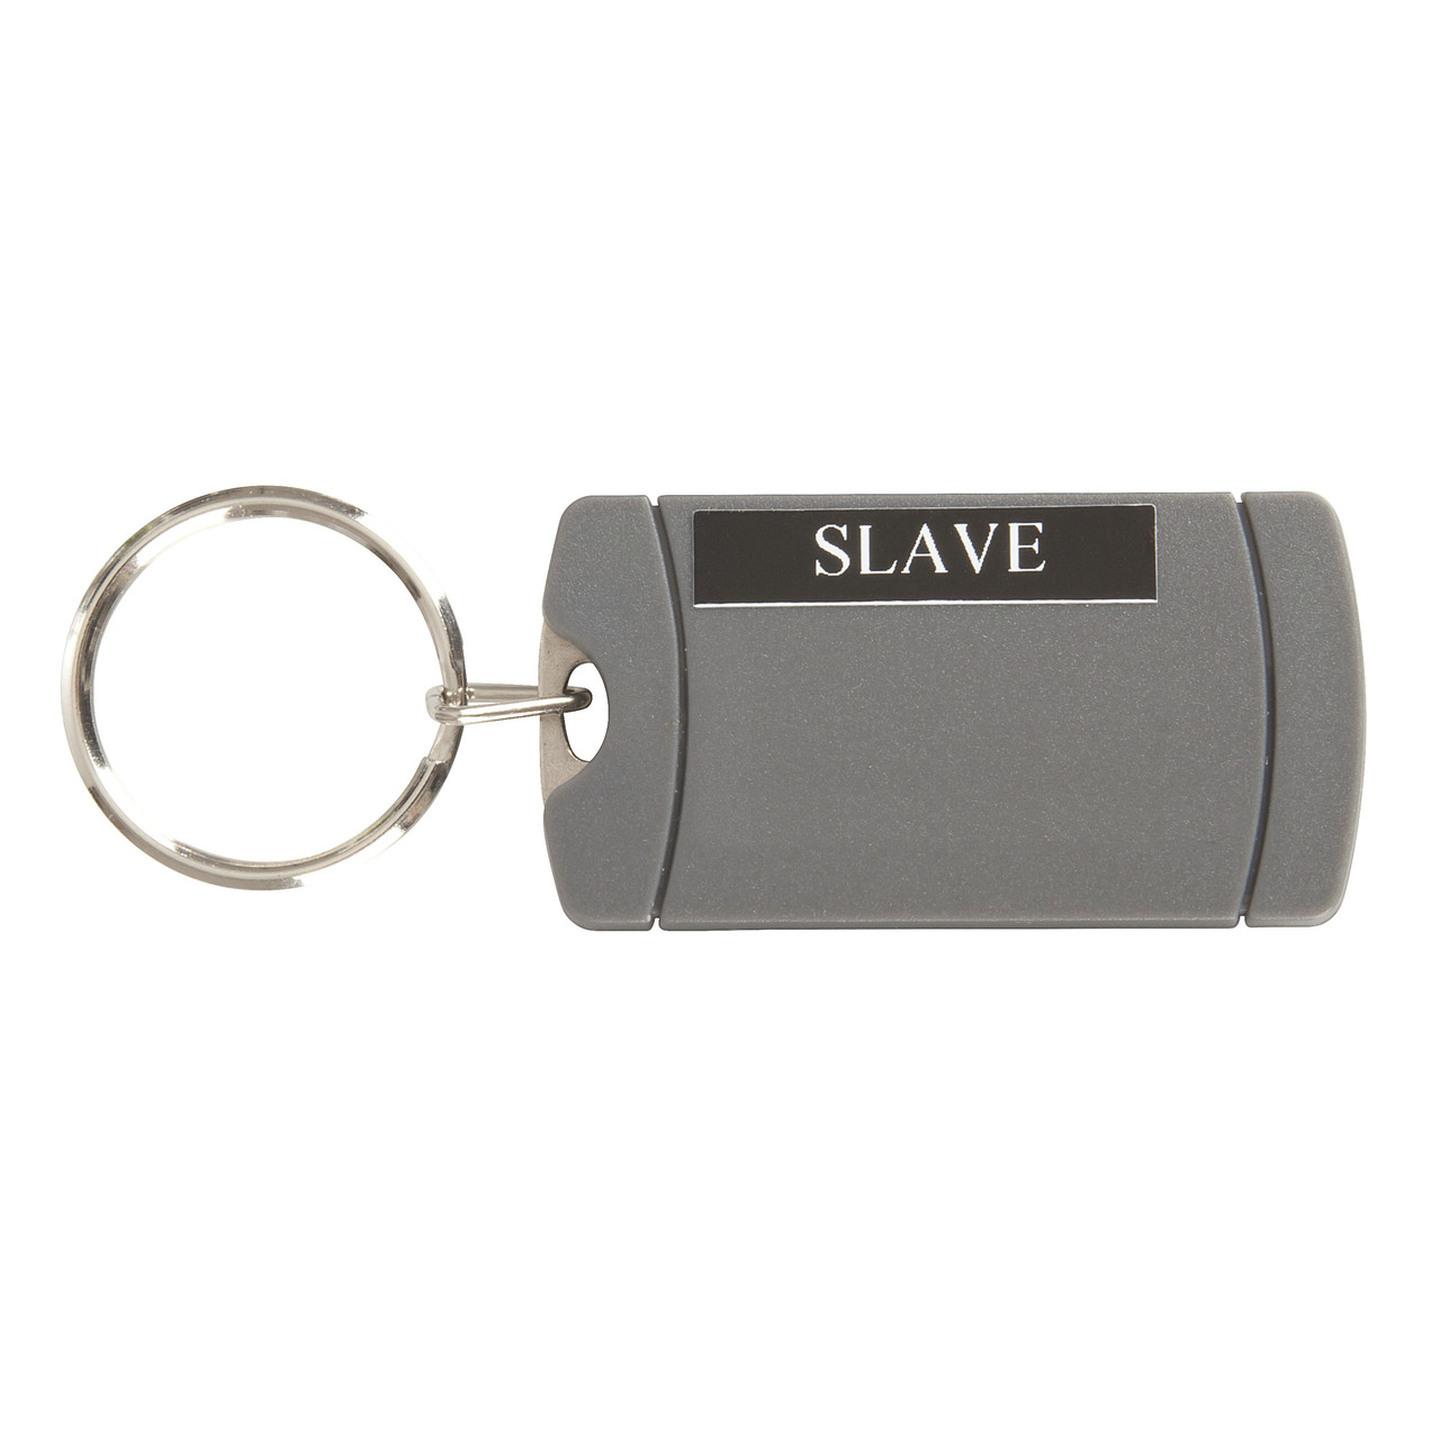 Spare Slave RFID Tag for QC3622